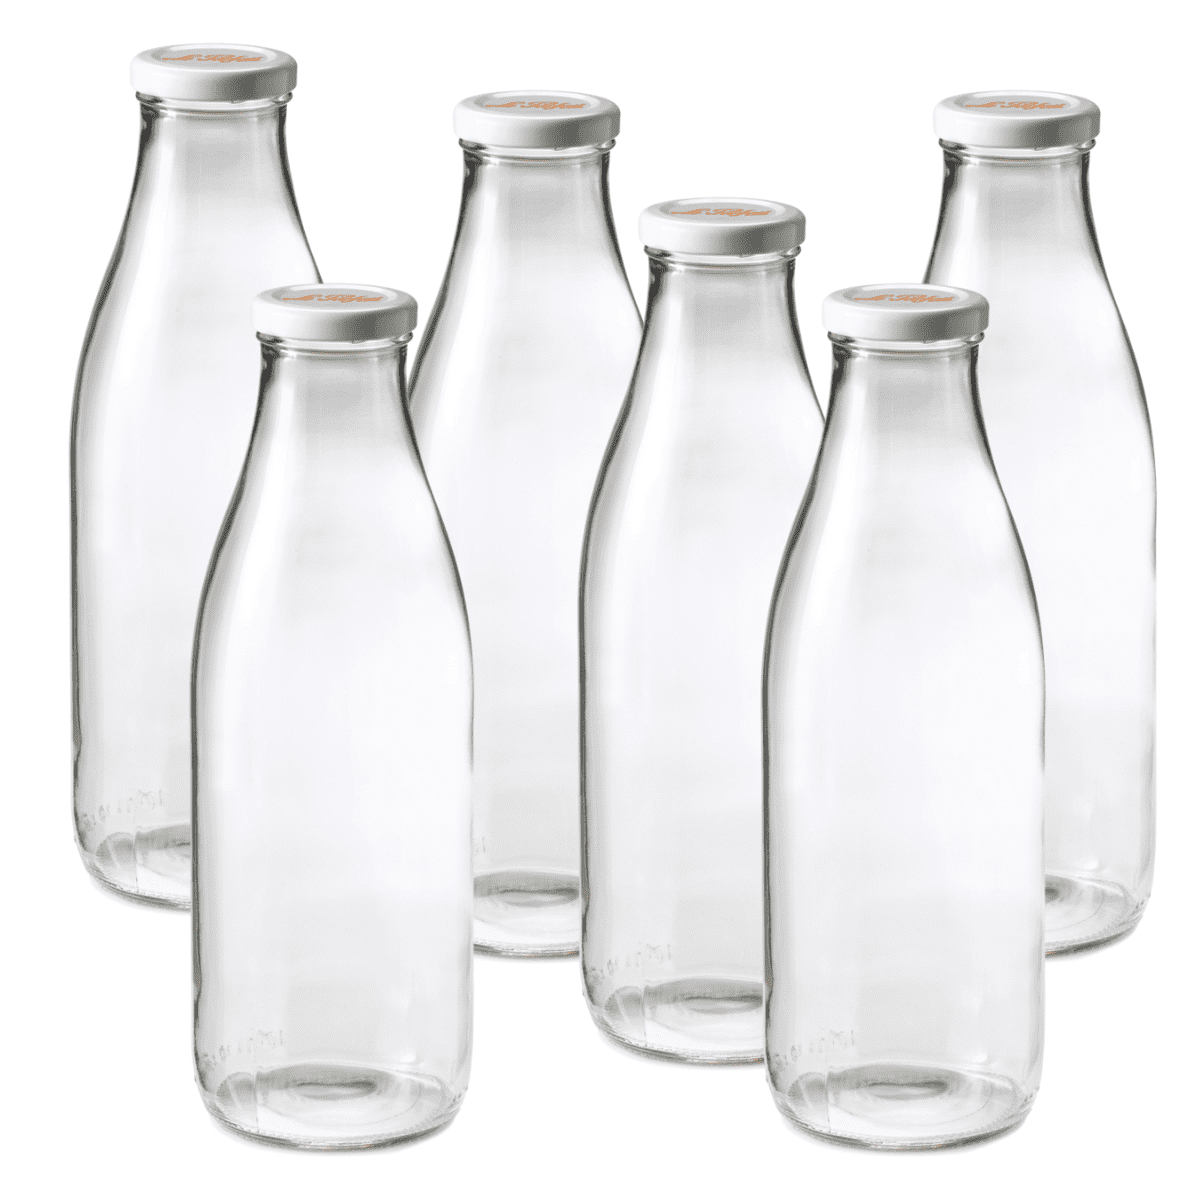 Buy Wholesale China 16oz Glass Milk Bottles With Reusable Metal Twist Lids  & Glass Milk Bottle at USD 0.22